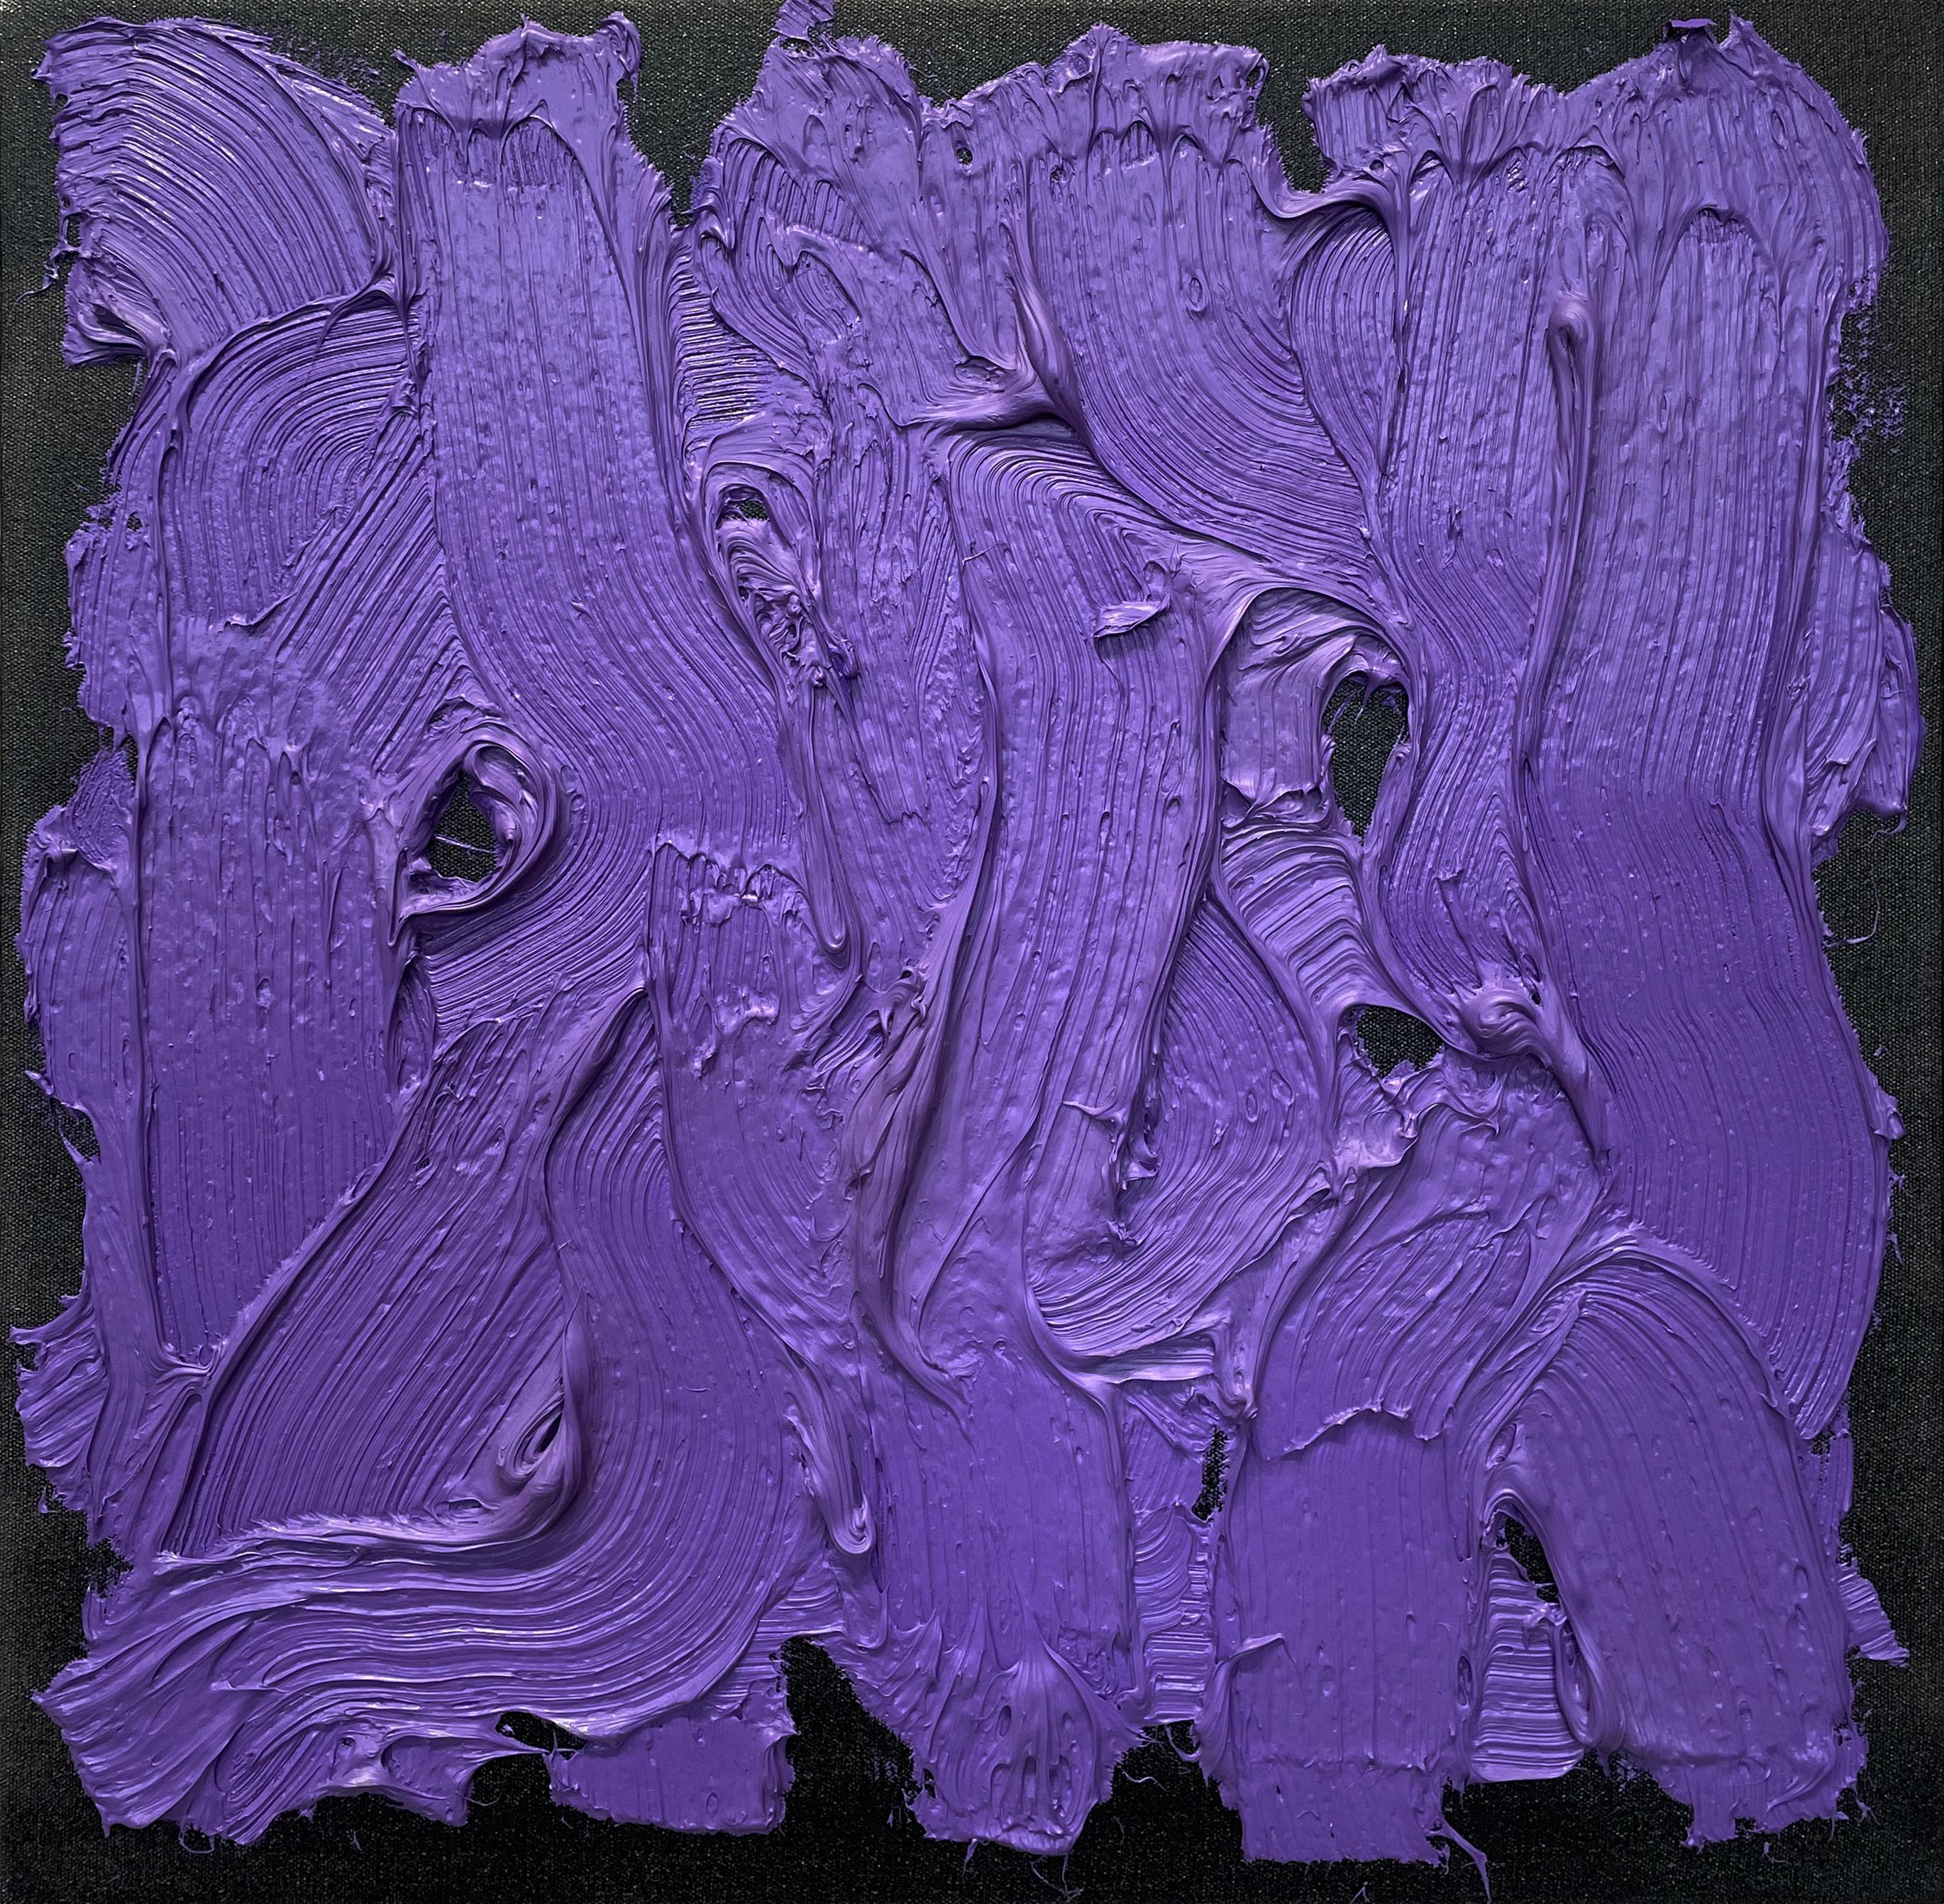 Abstract Painting John Zinsser - Hysterical Phantasy, violet noir abstrait